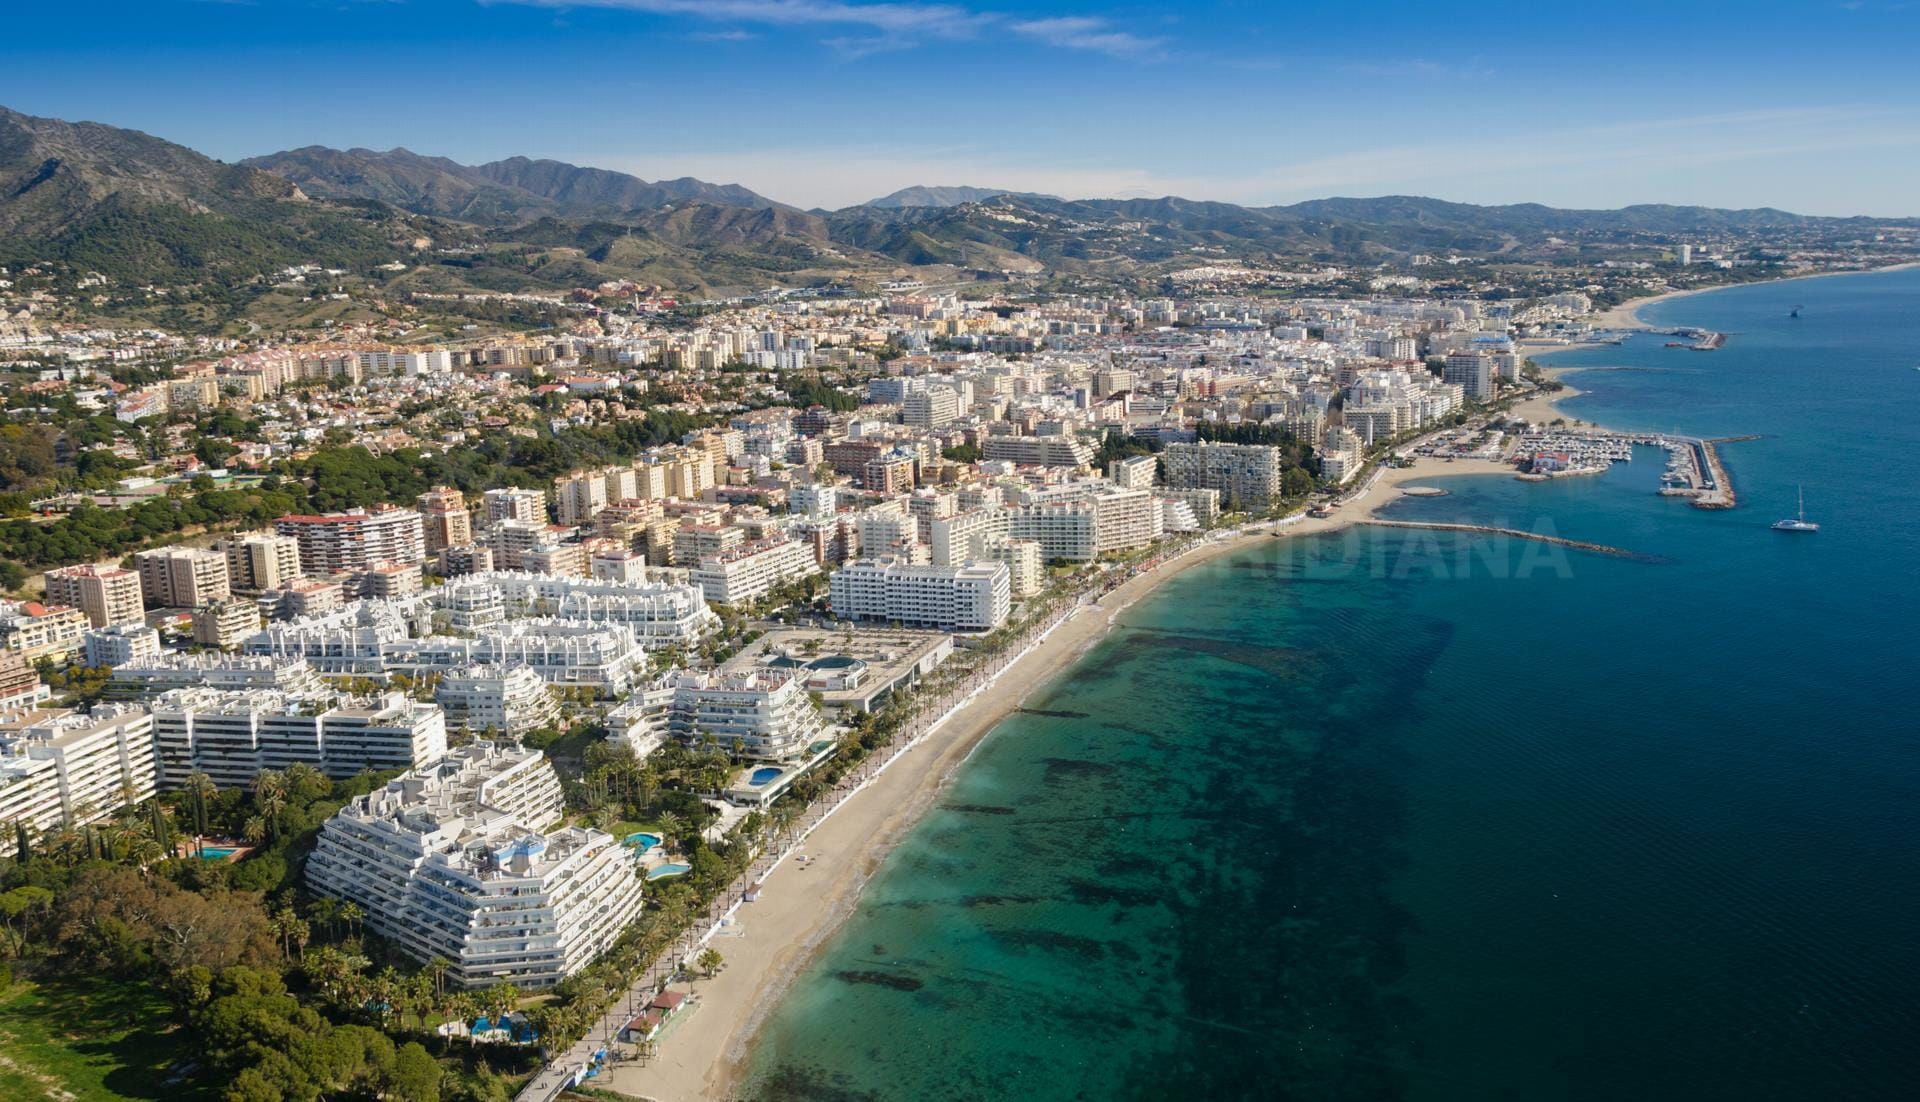 Marbella urban plan (PGOU) reaches final stages